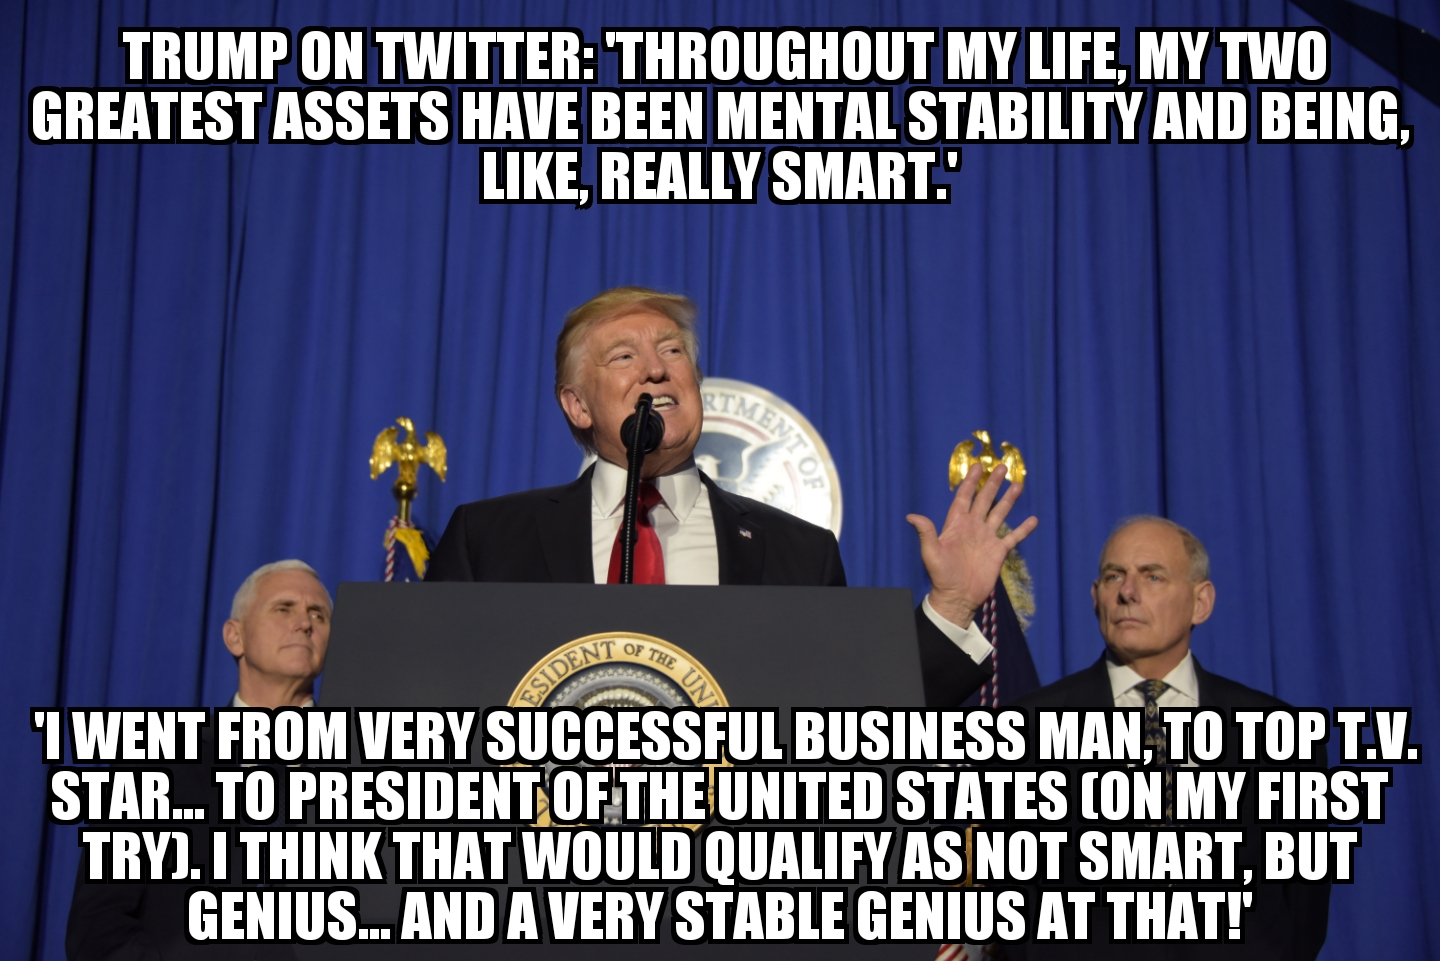 Trump calls self stable genius on Twitter